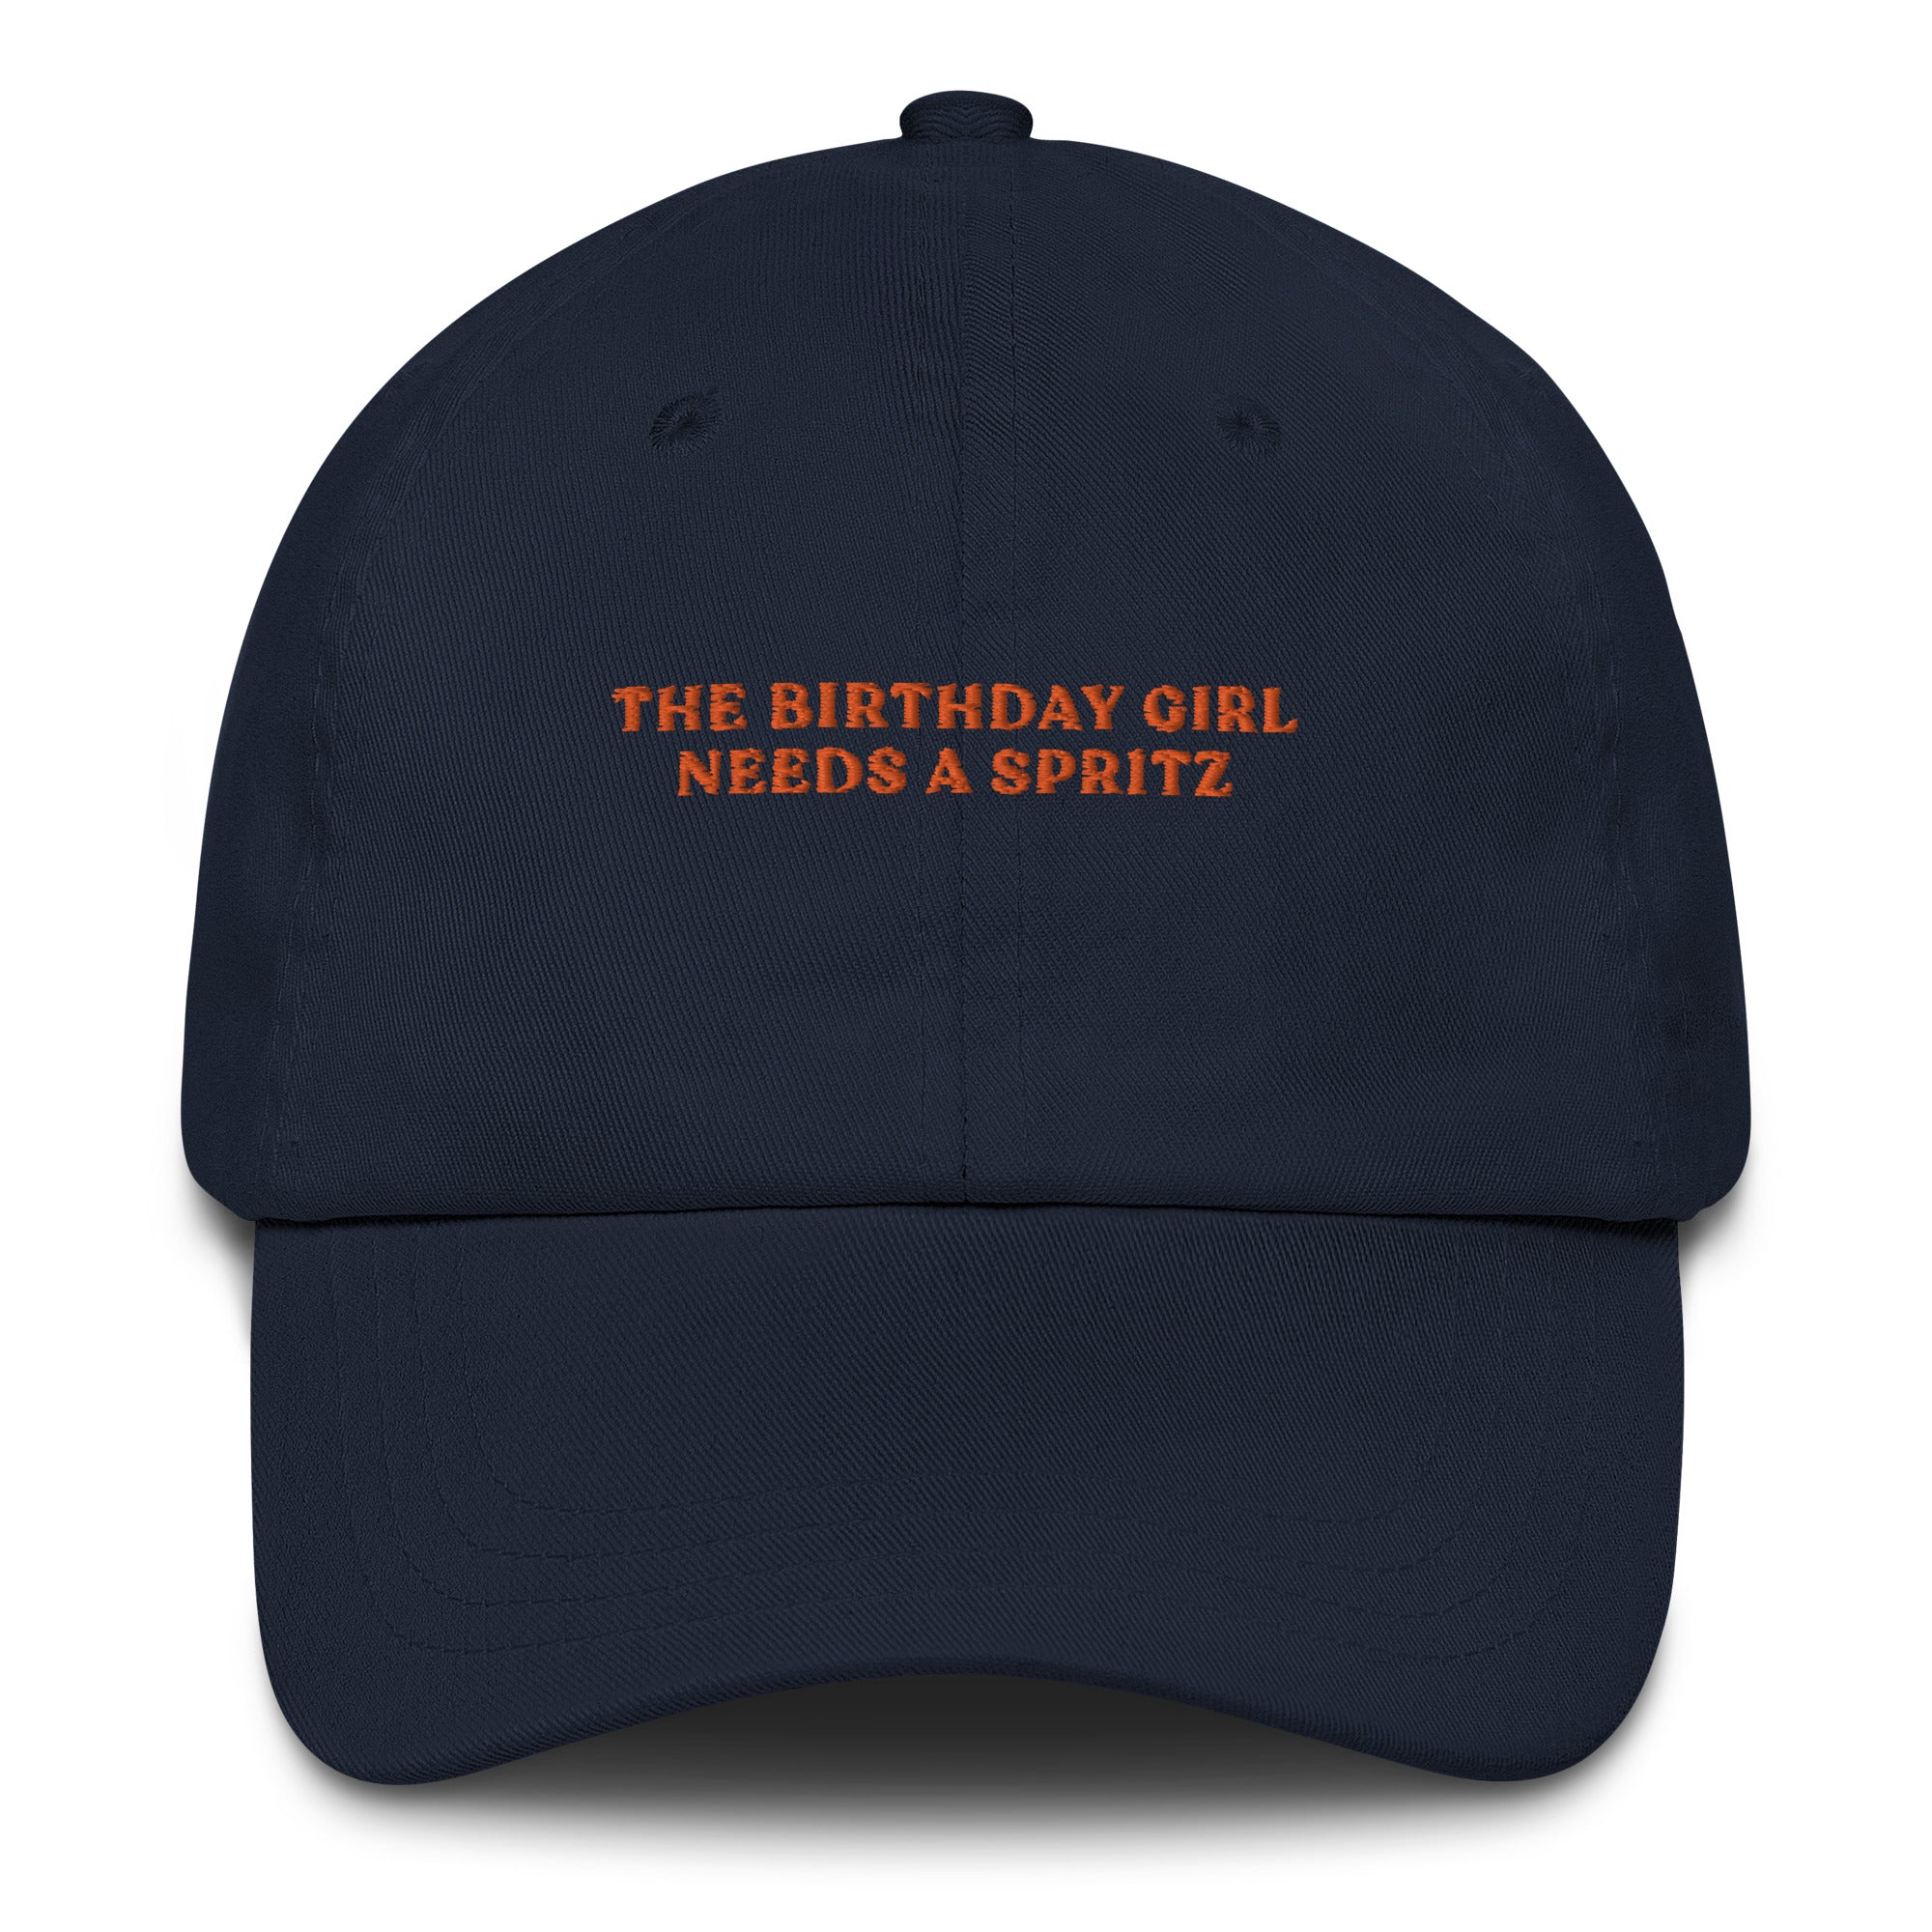 The Birthday Girl needs a Spritz - Cap